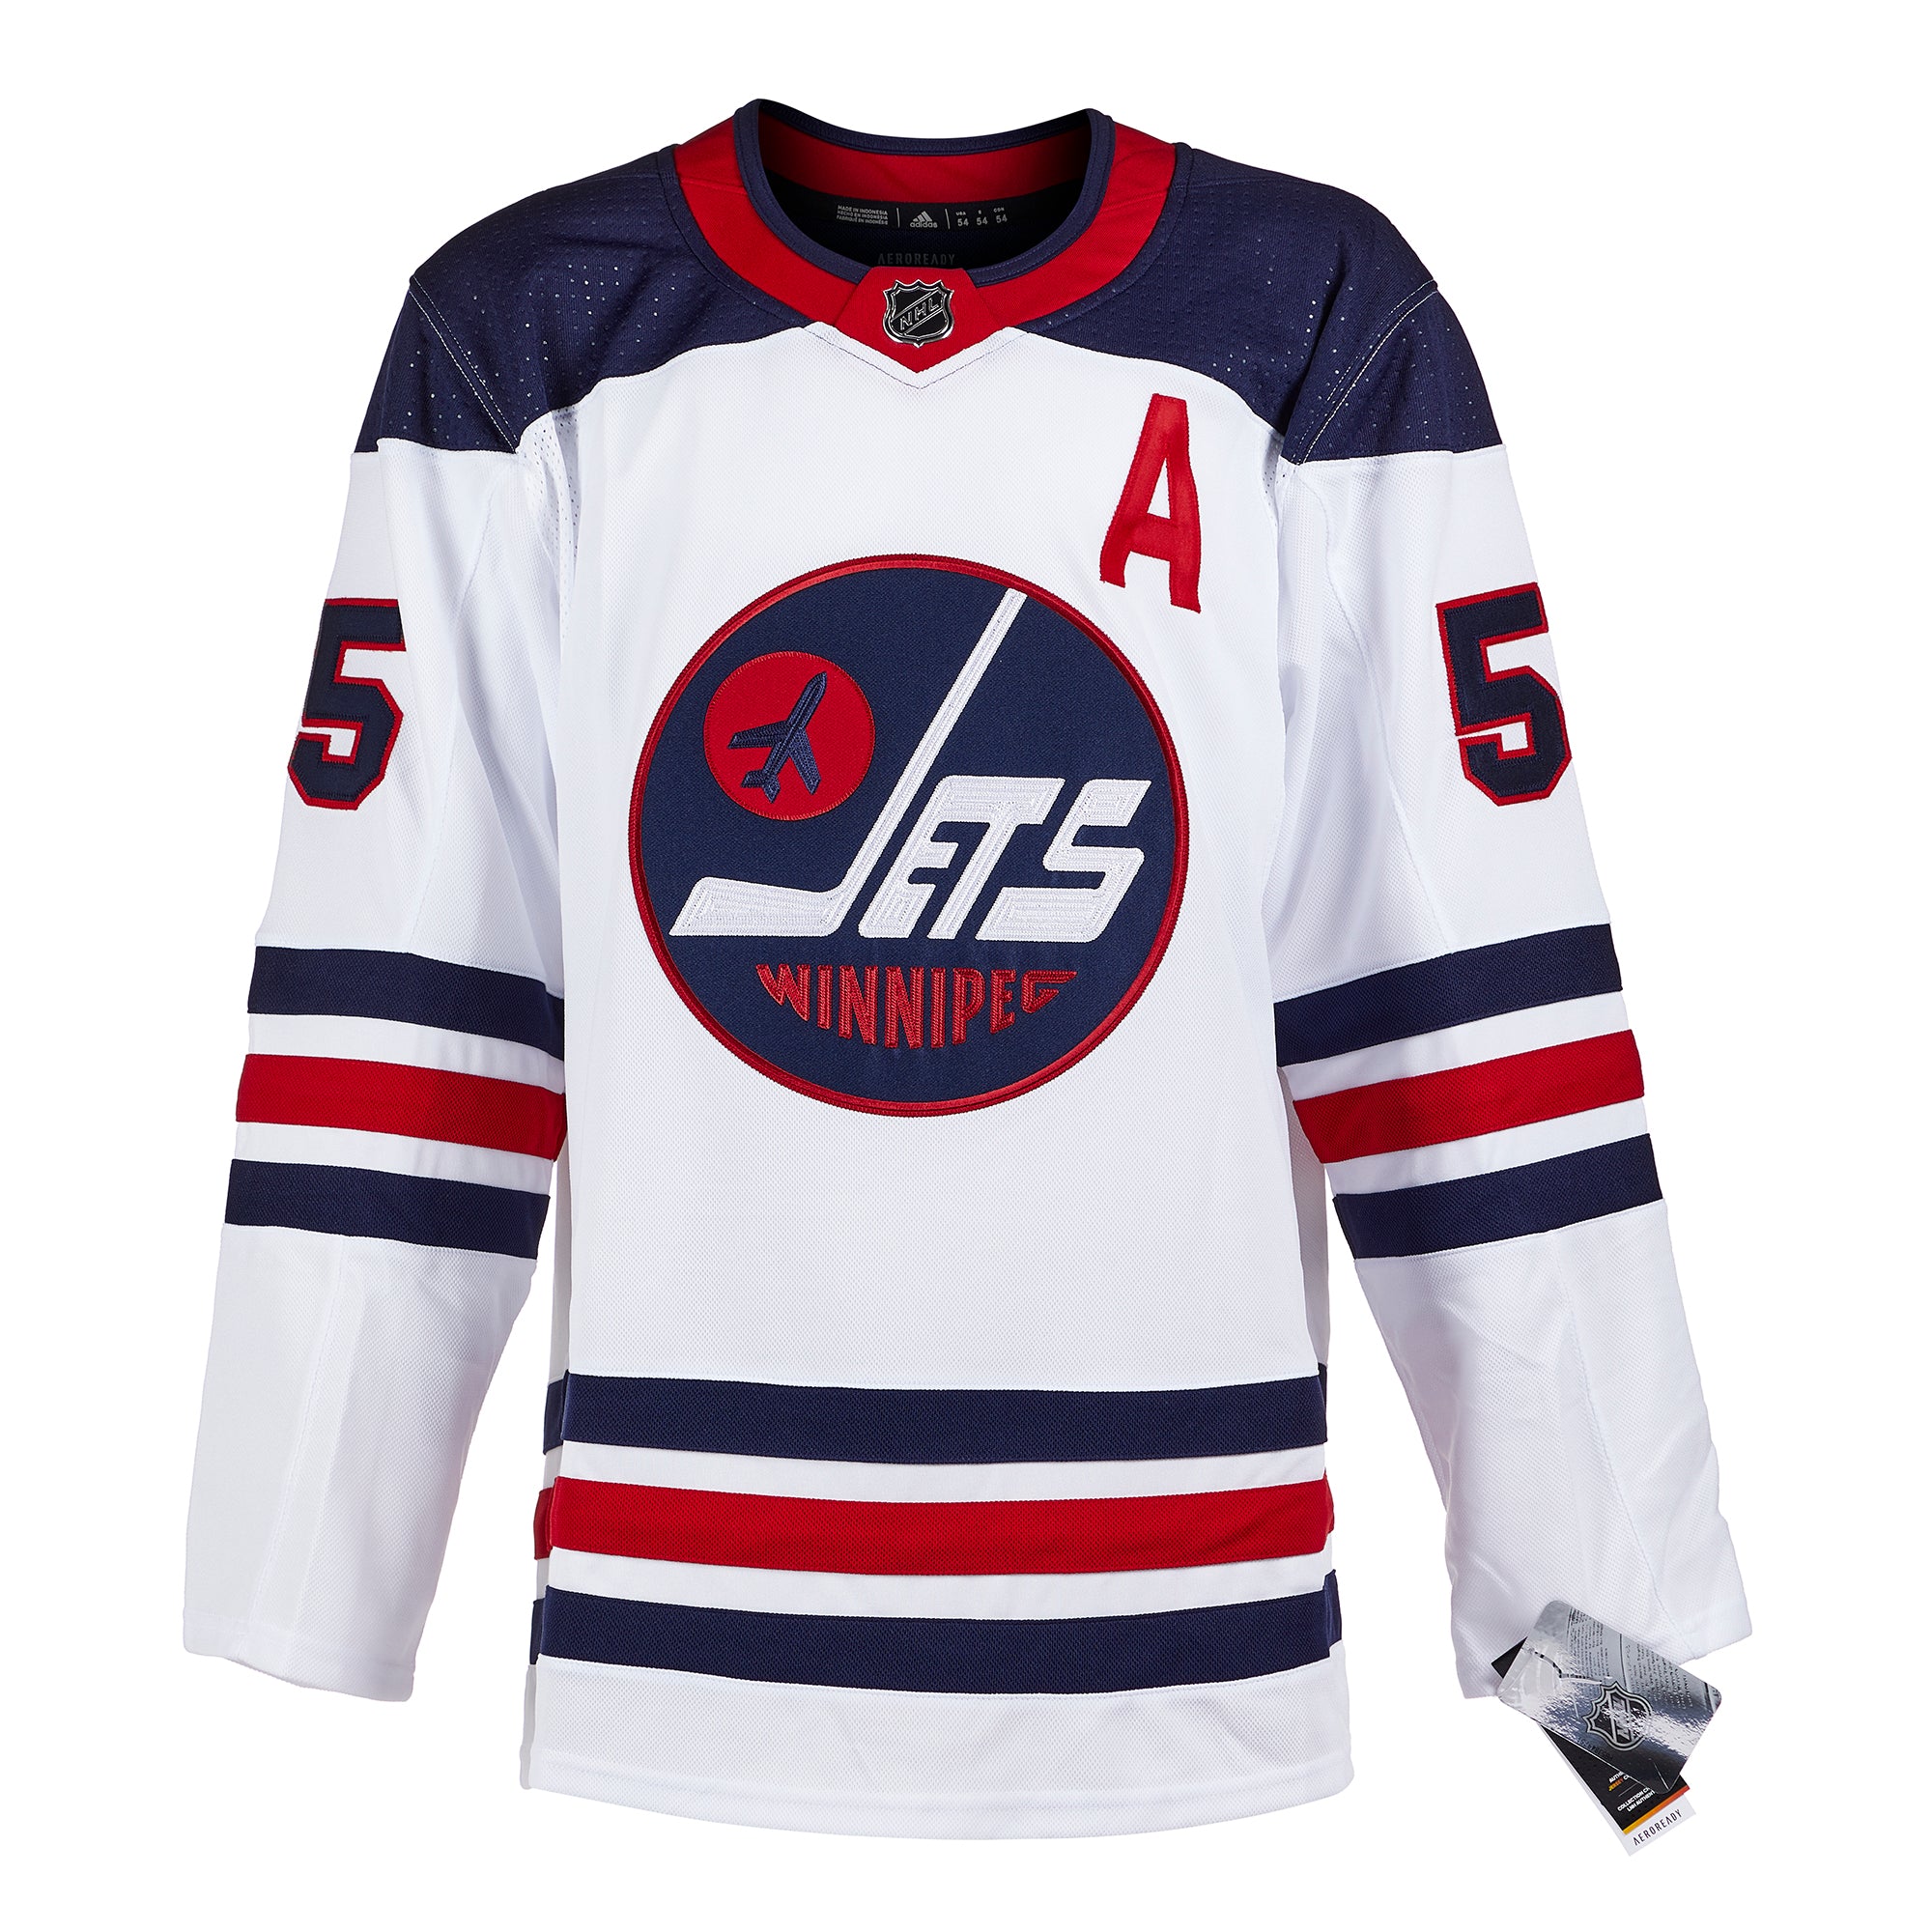 Authentic Adidas Winnipeg Jets Heritage Classic Jersey Size 54 XL